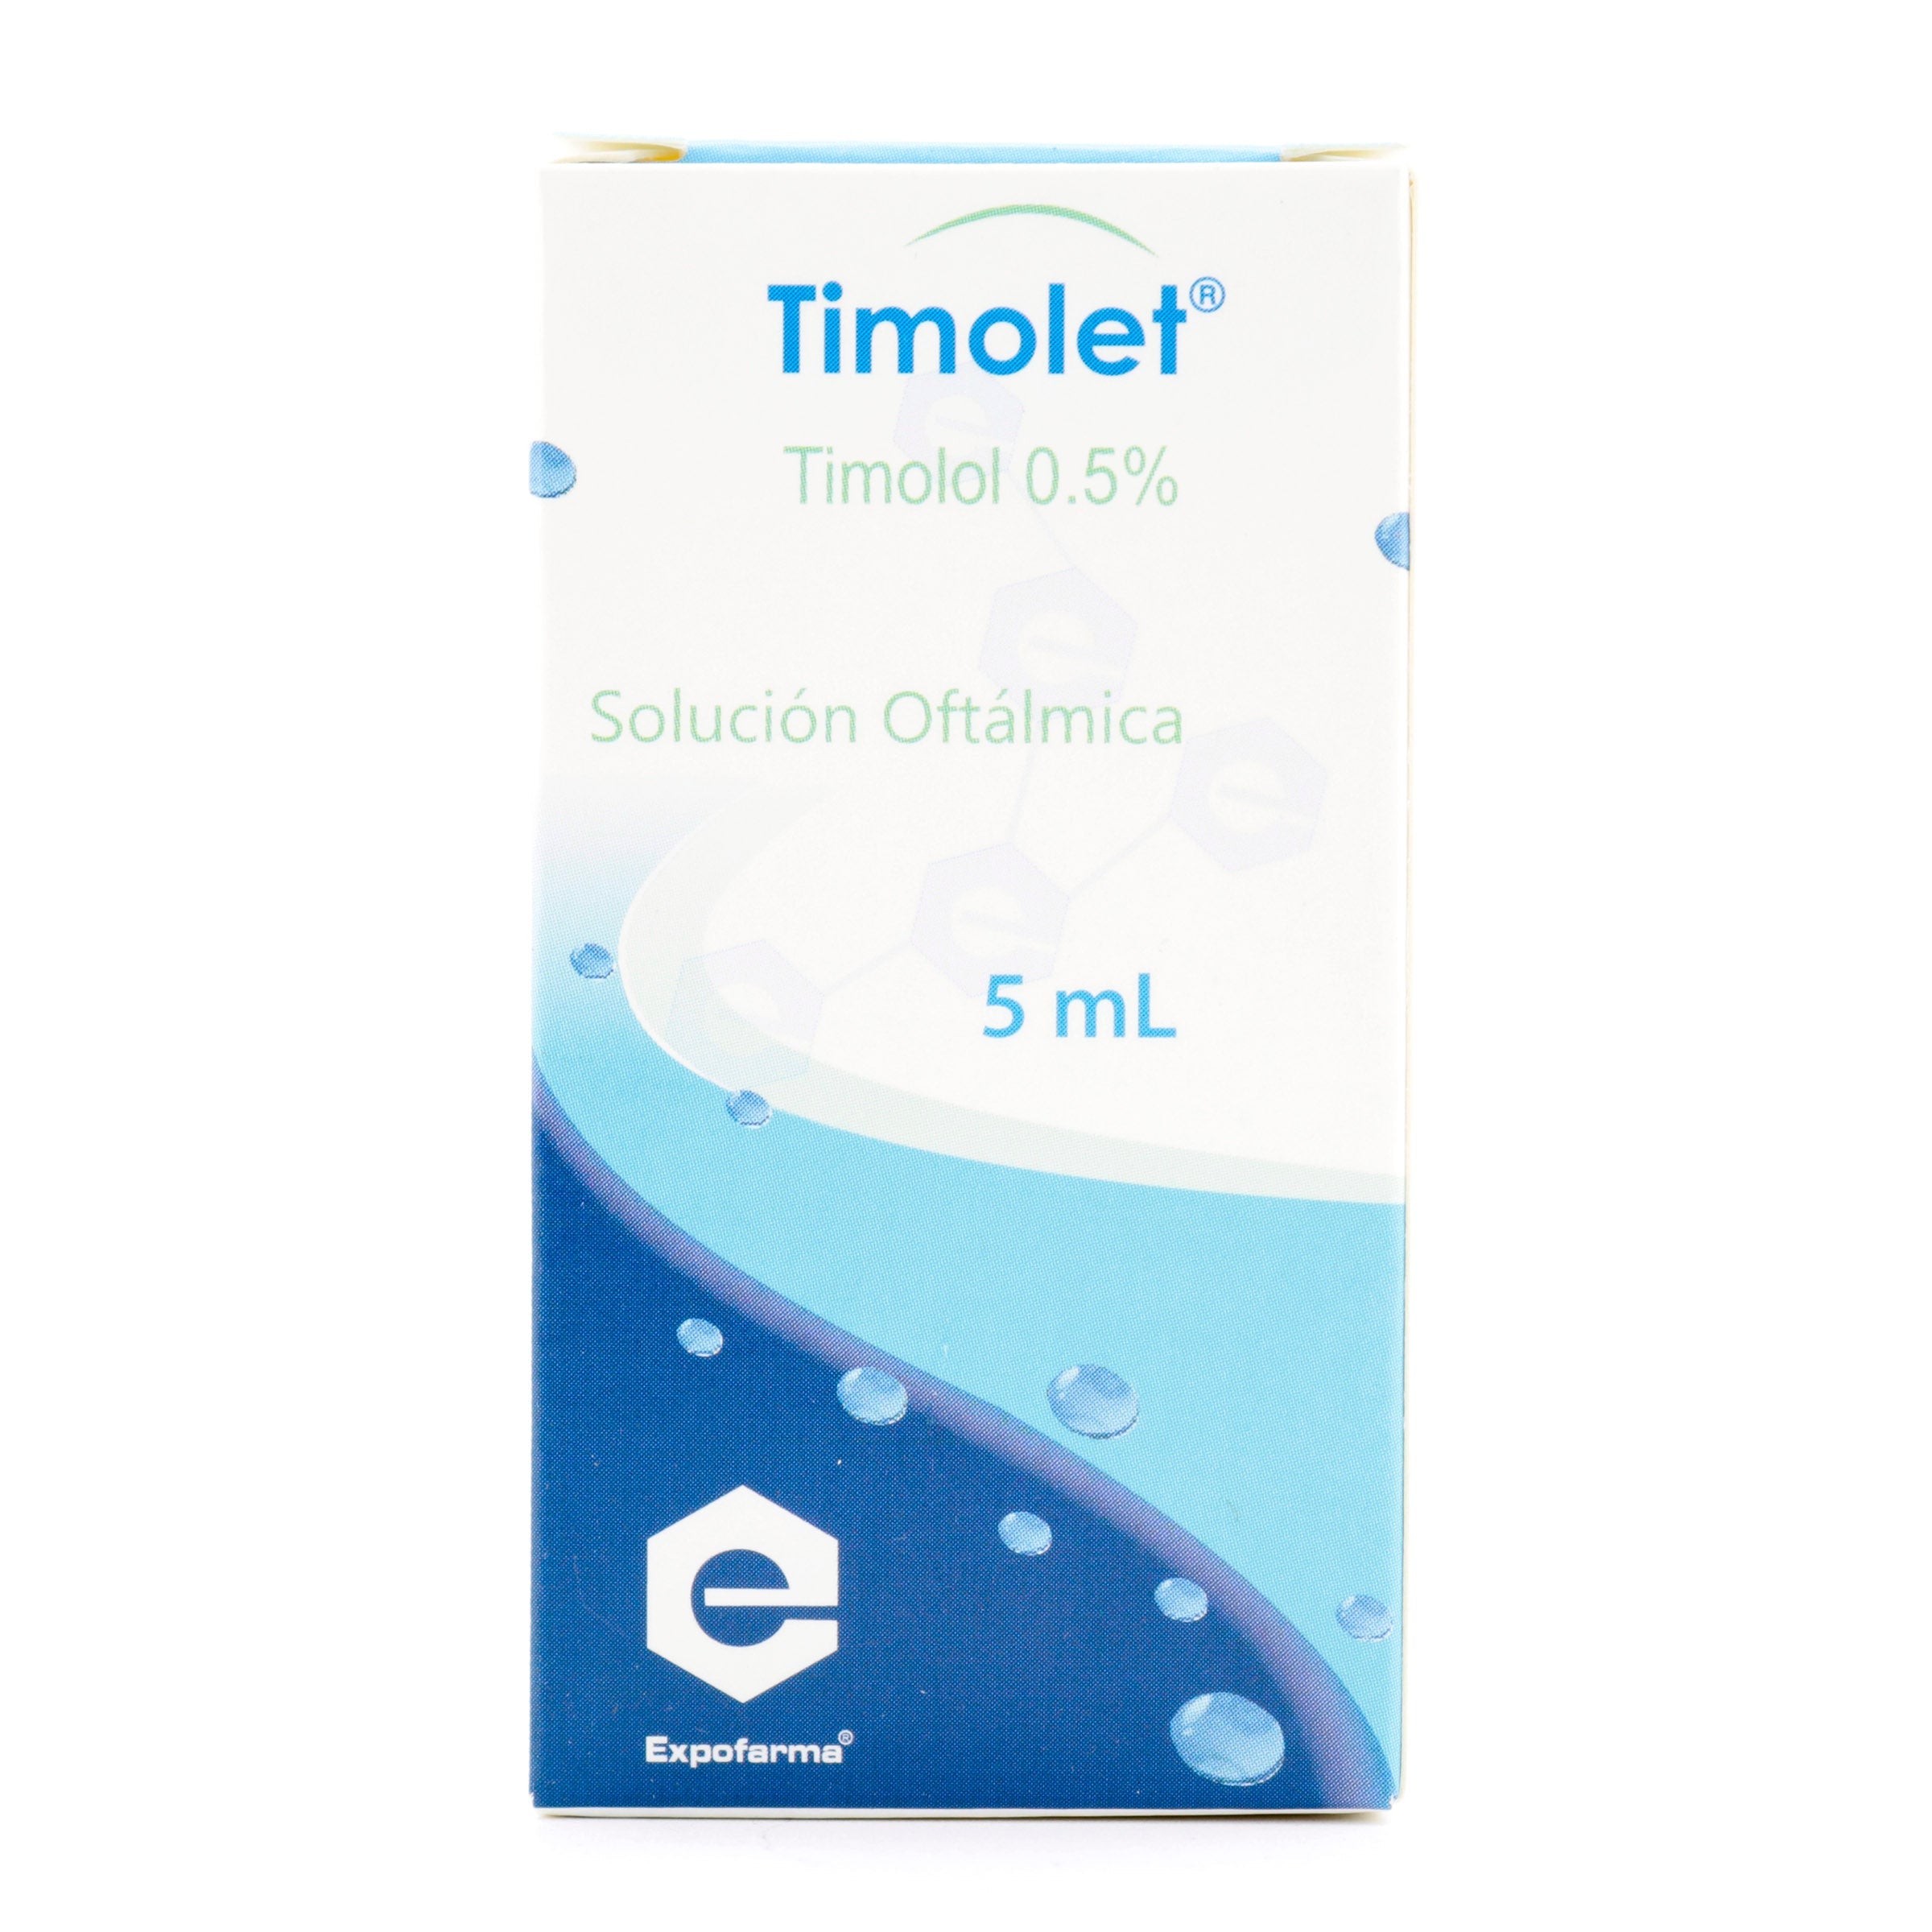 TIMOLET 0.5% TIMOLOL GOTAS OFTALMICAS 5 ML